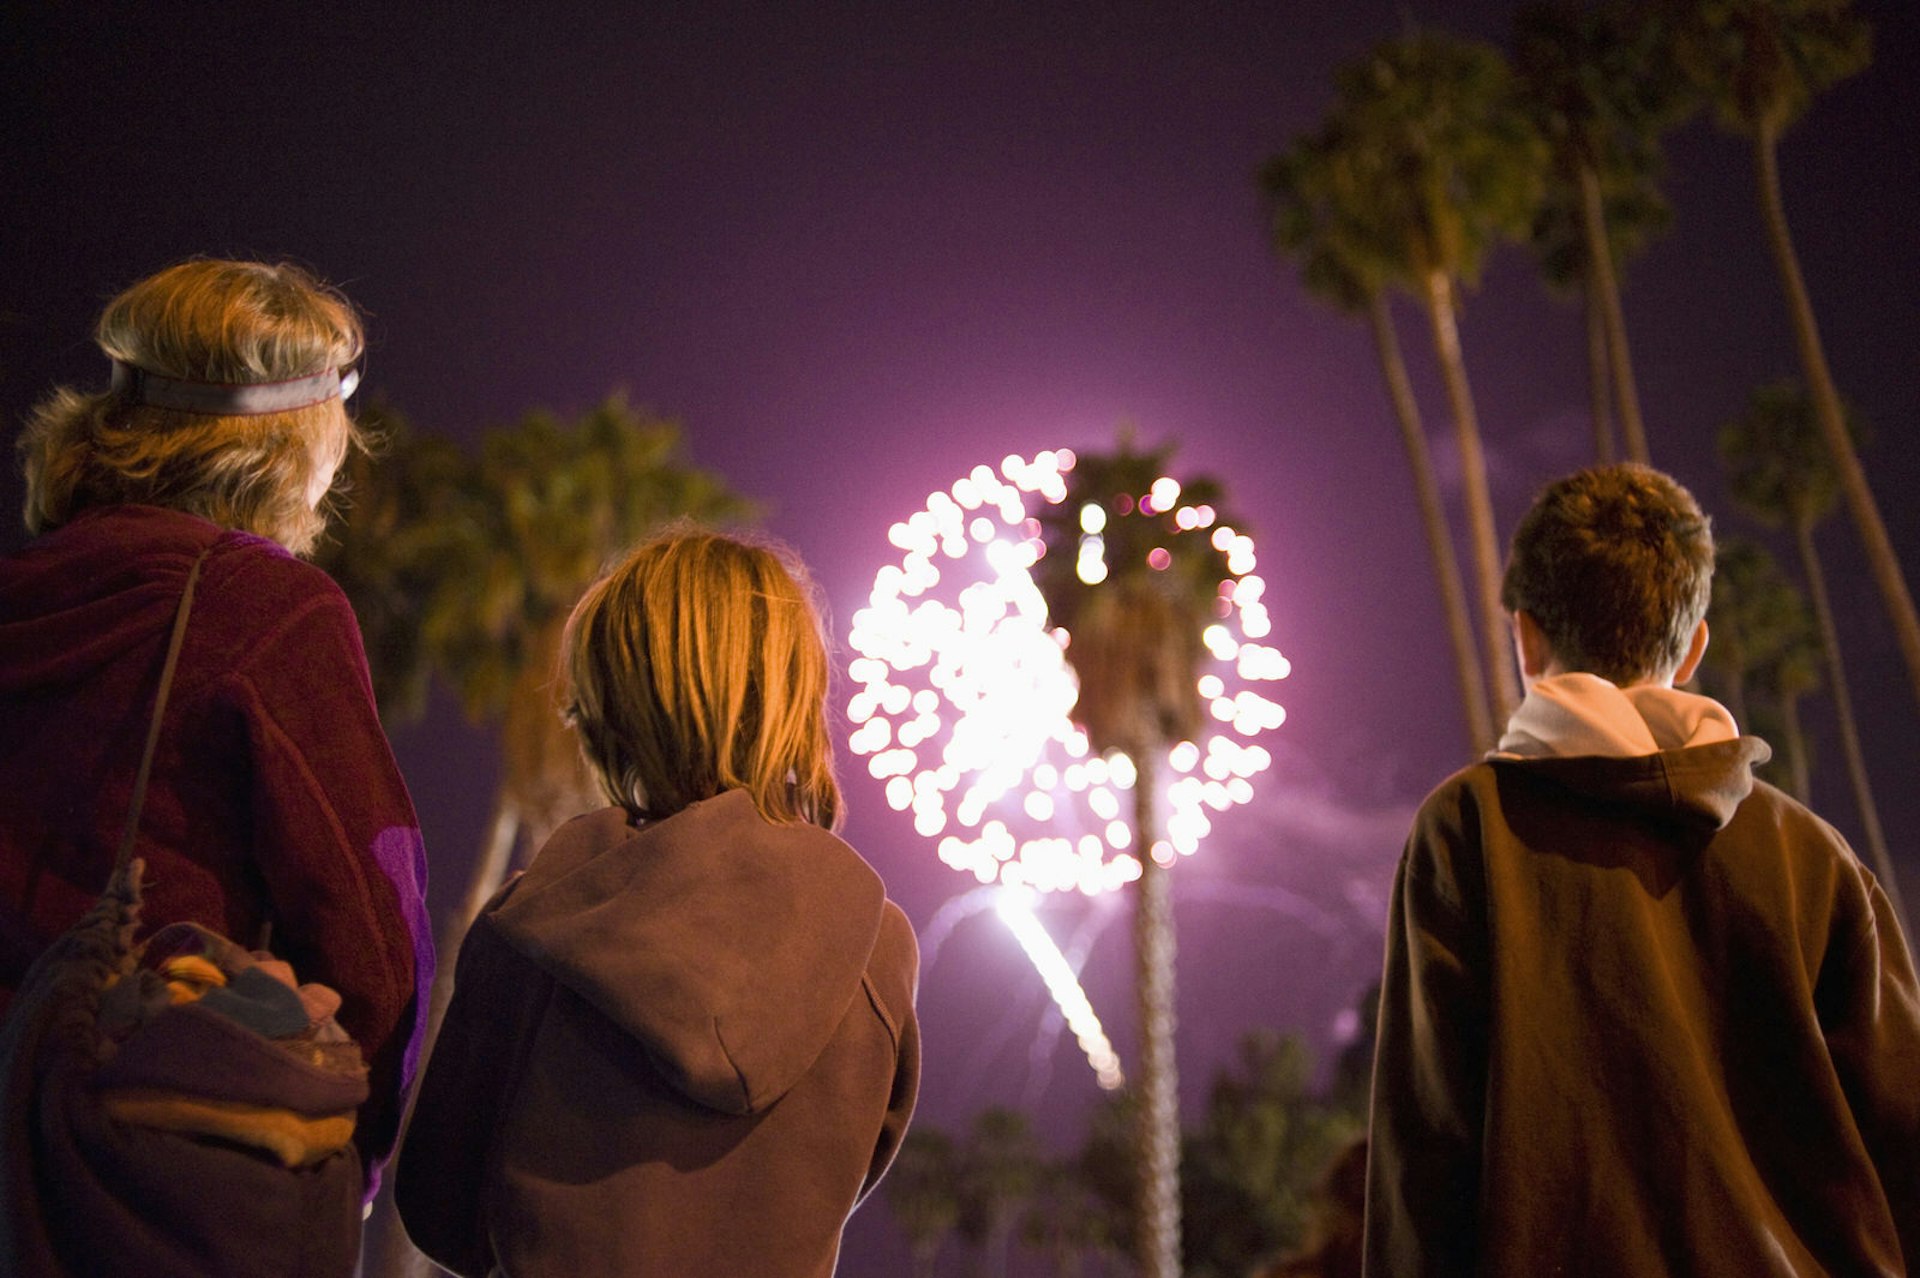 Fourth of July fireworks along the beach in Santa Barbara.